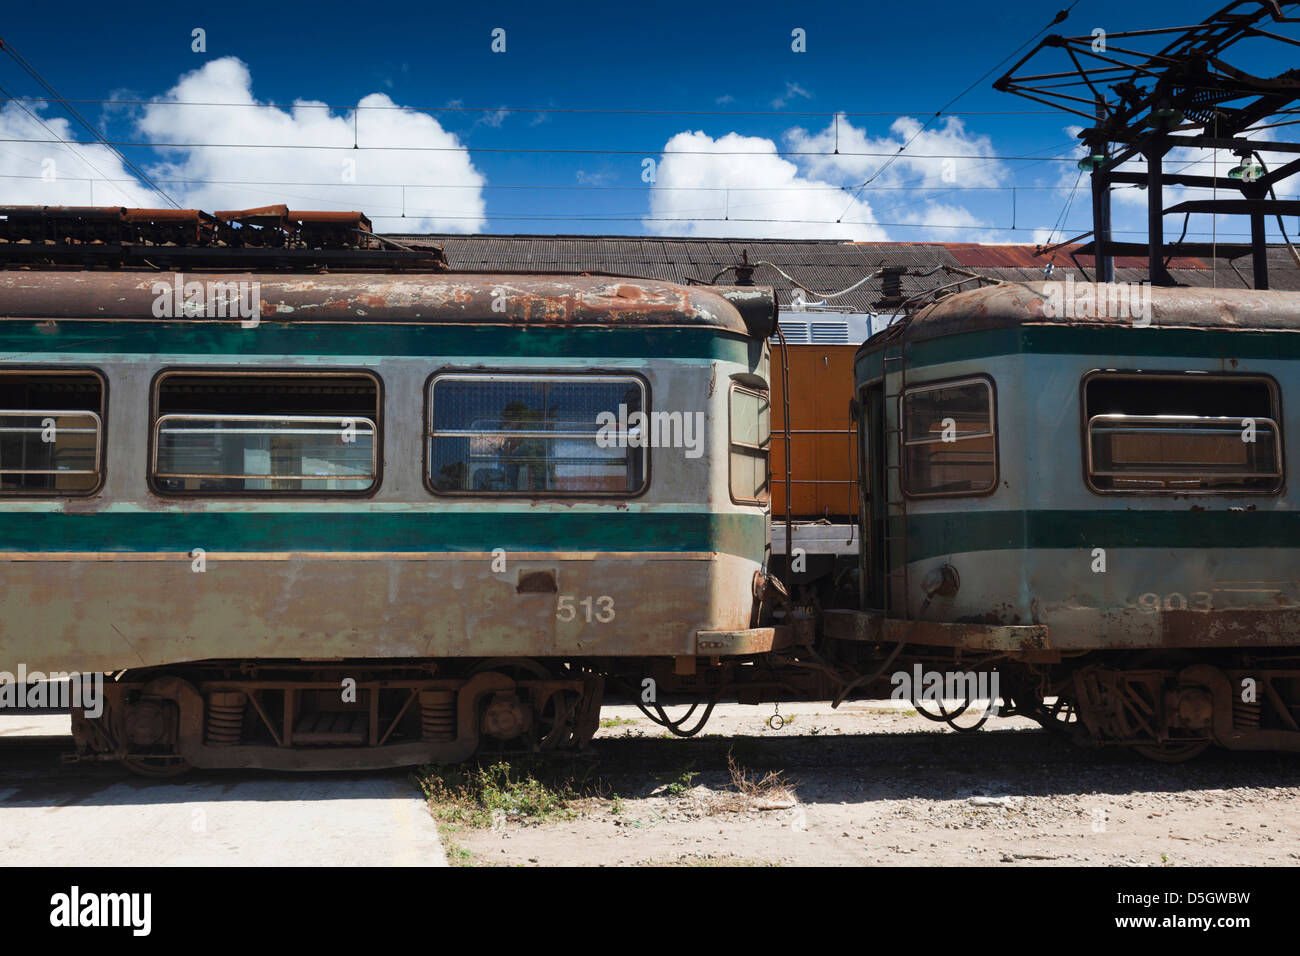 Cuba, Havana Province, Camilo Cienfuegos, ruins of the former US-built Hershey sugar factory, the Hershey Train, still runs Stock Photo